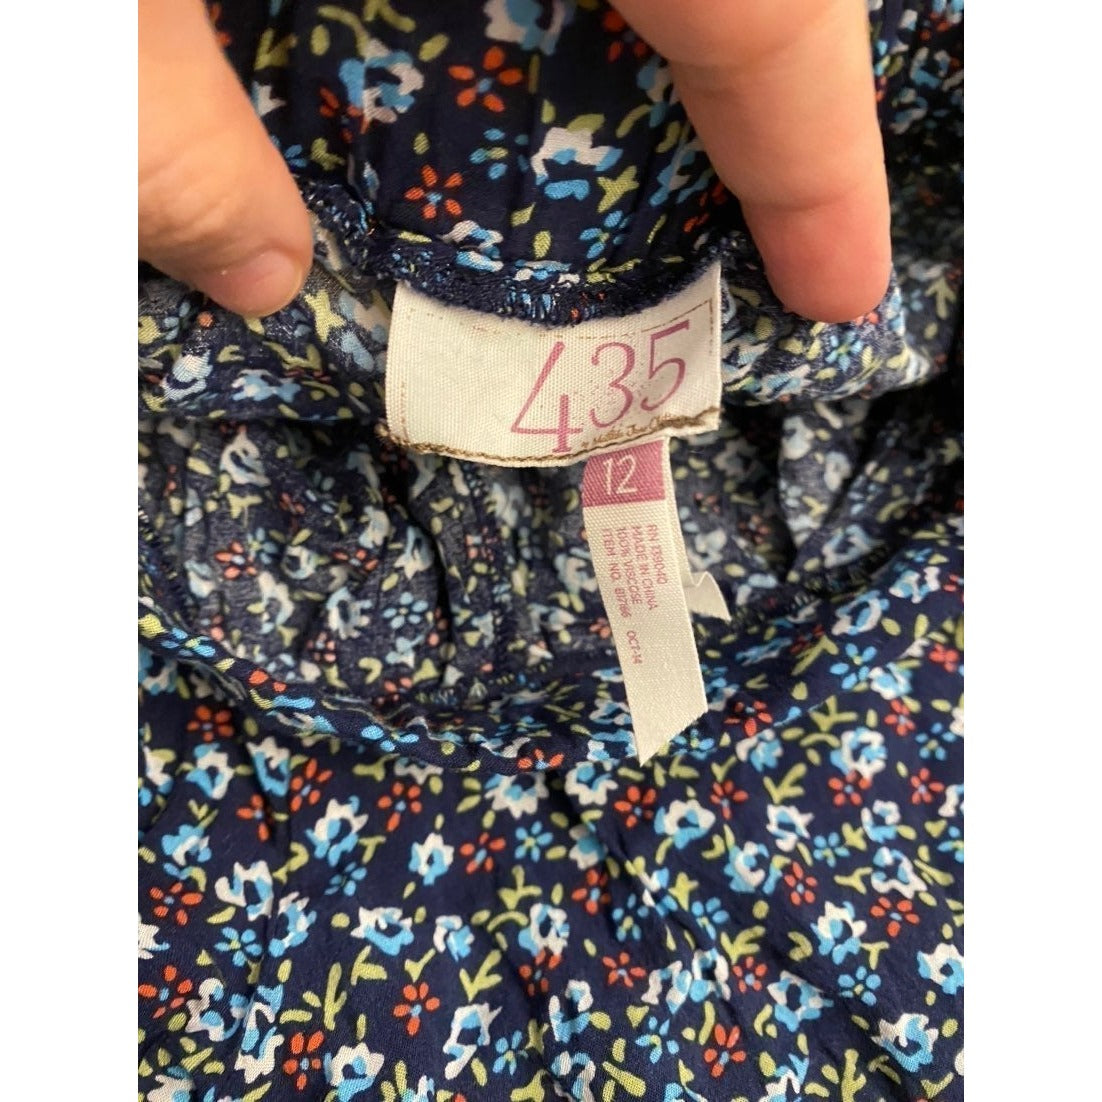 New Size 12 Matilda Jane Dress – SummerKids901